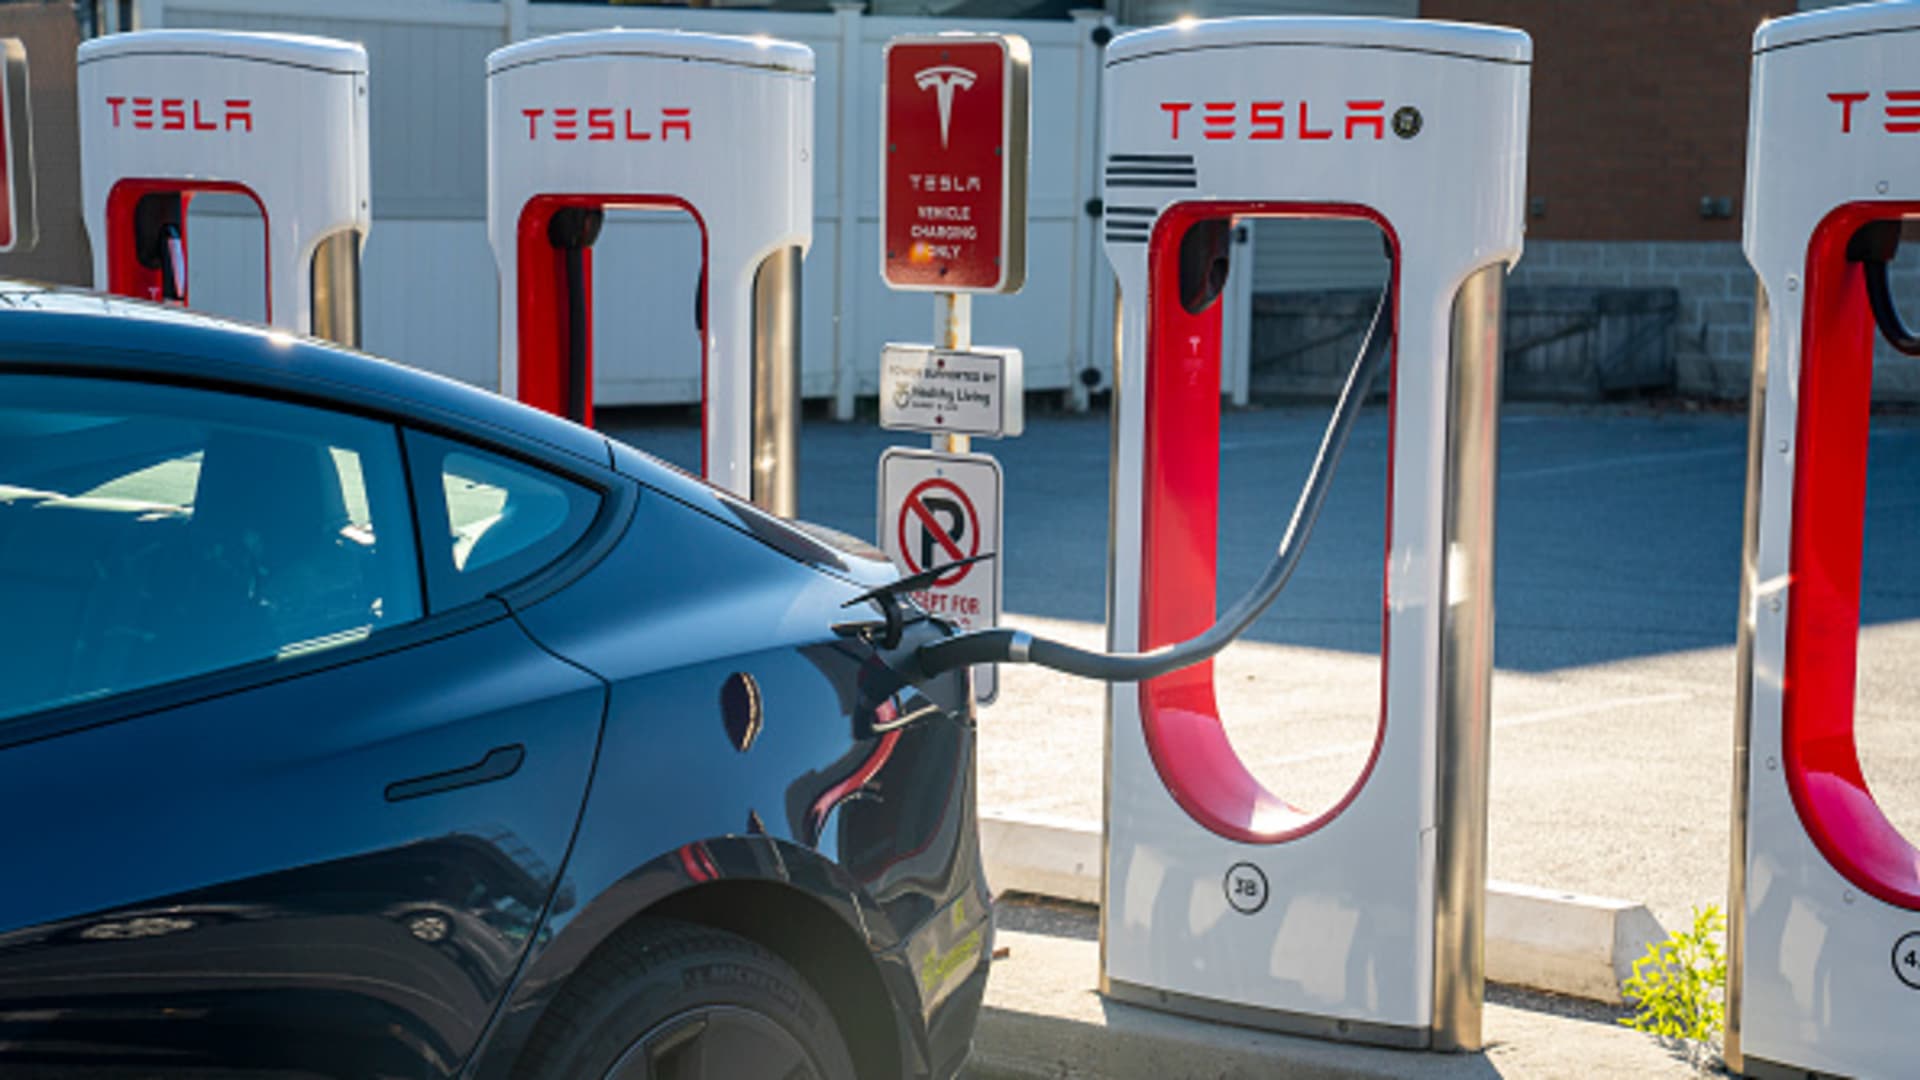 An electric Tesla car recharges at a Tesla kiosk November 7, 2021 in South Burlington, Vermont.